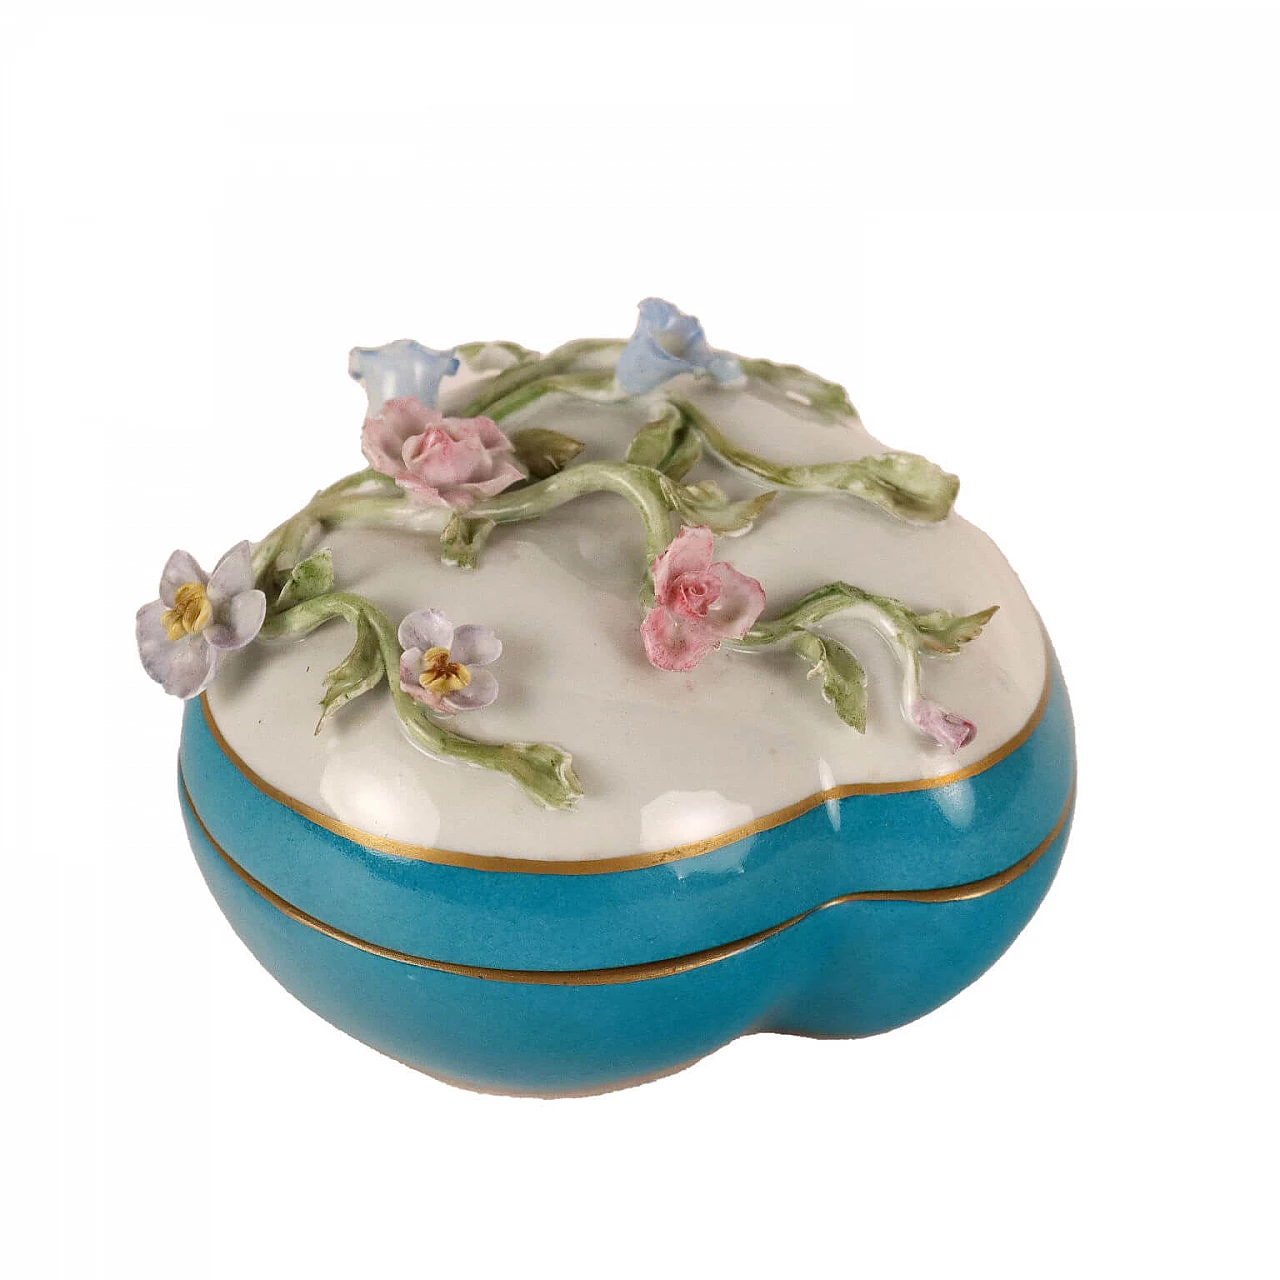 Sèvres porcelain small box with floral decoration 1